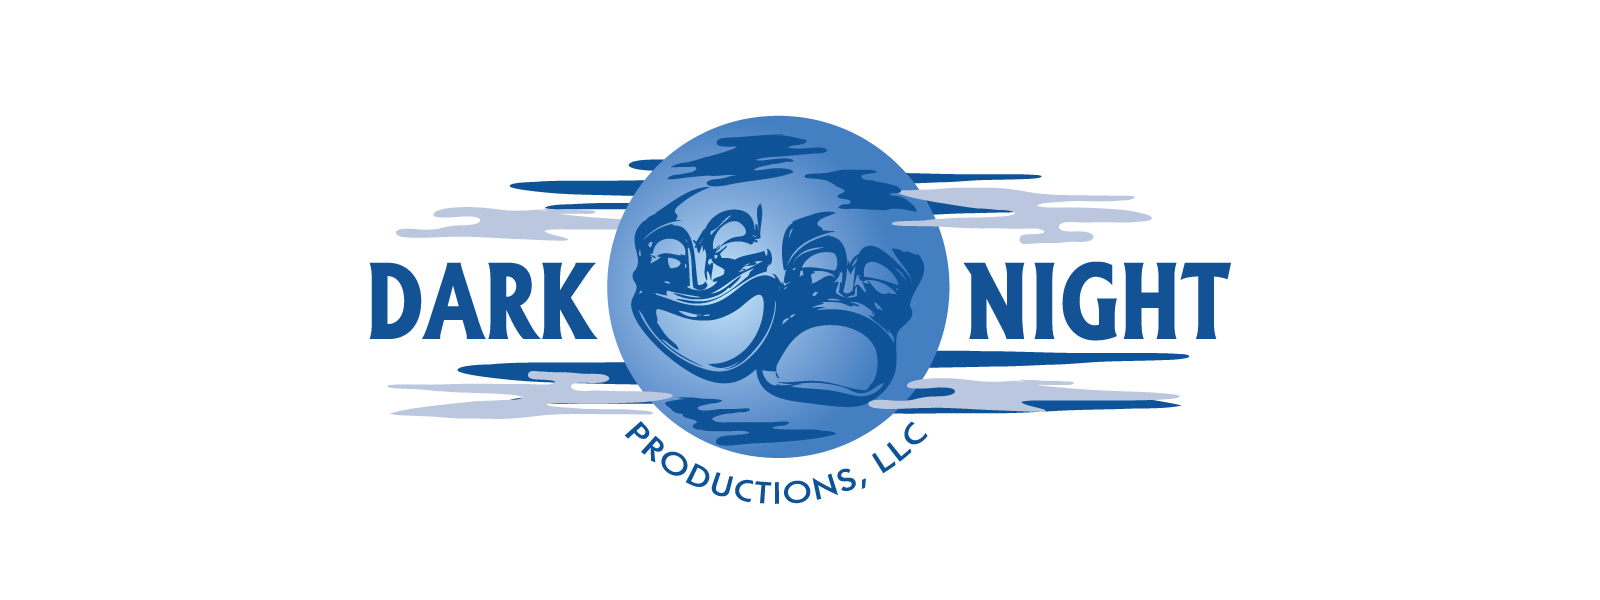 Logo Design, Dark Night, Branding